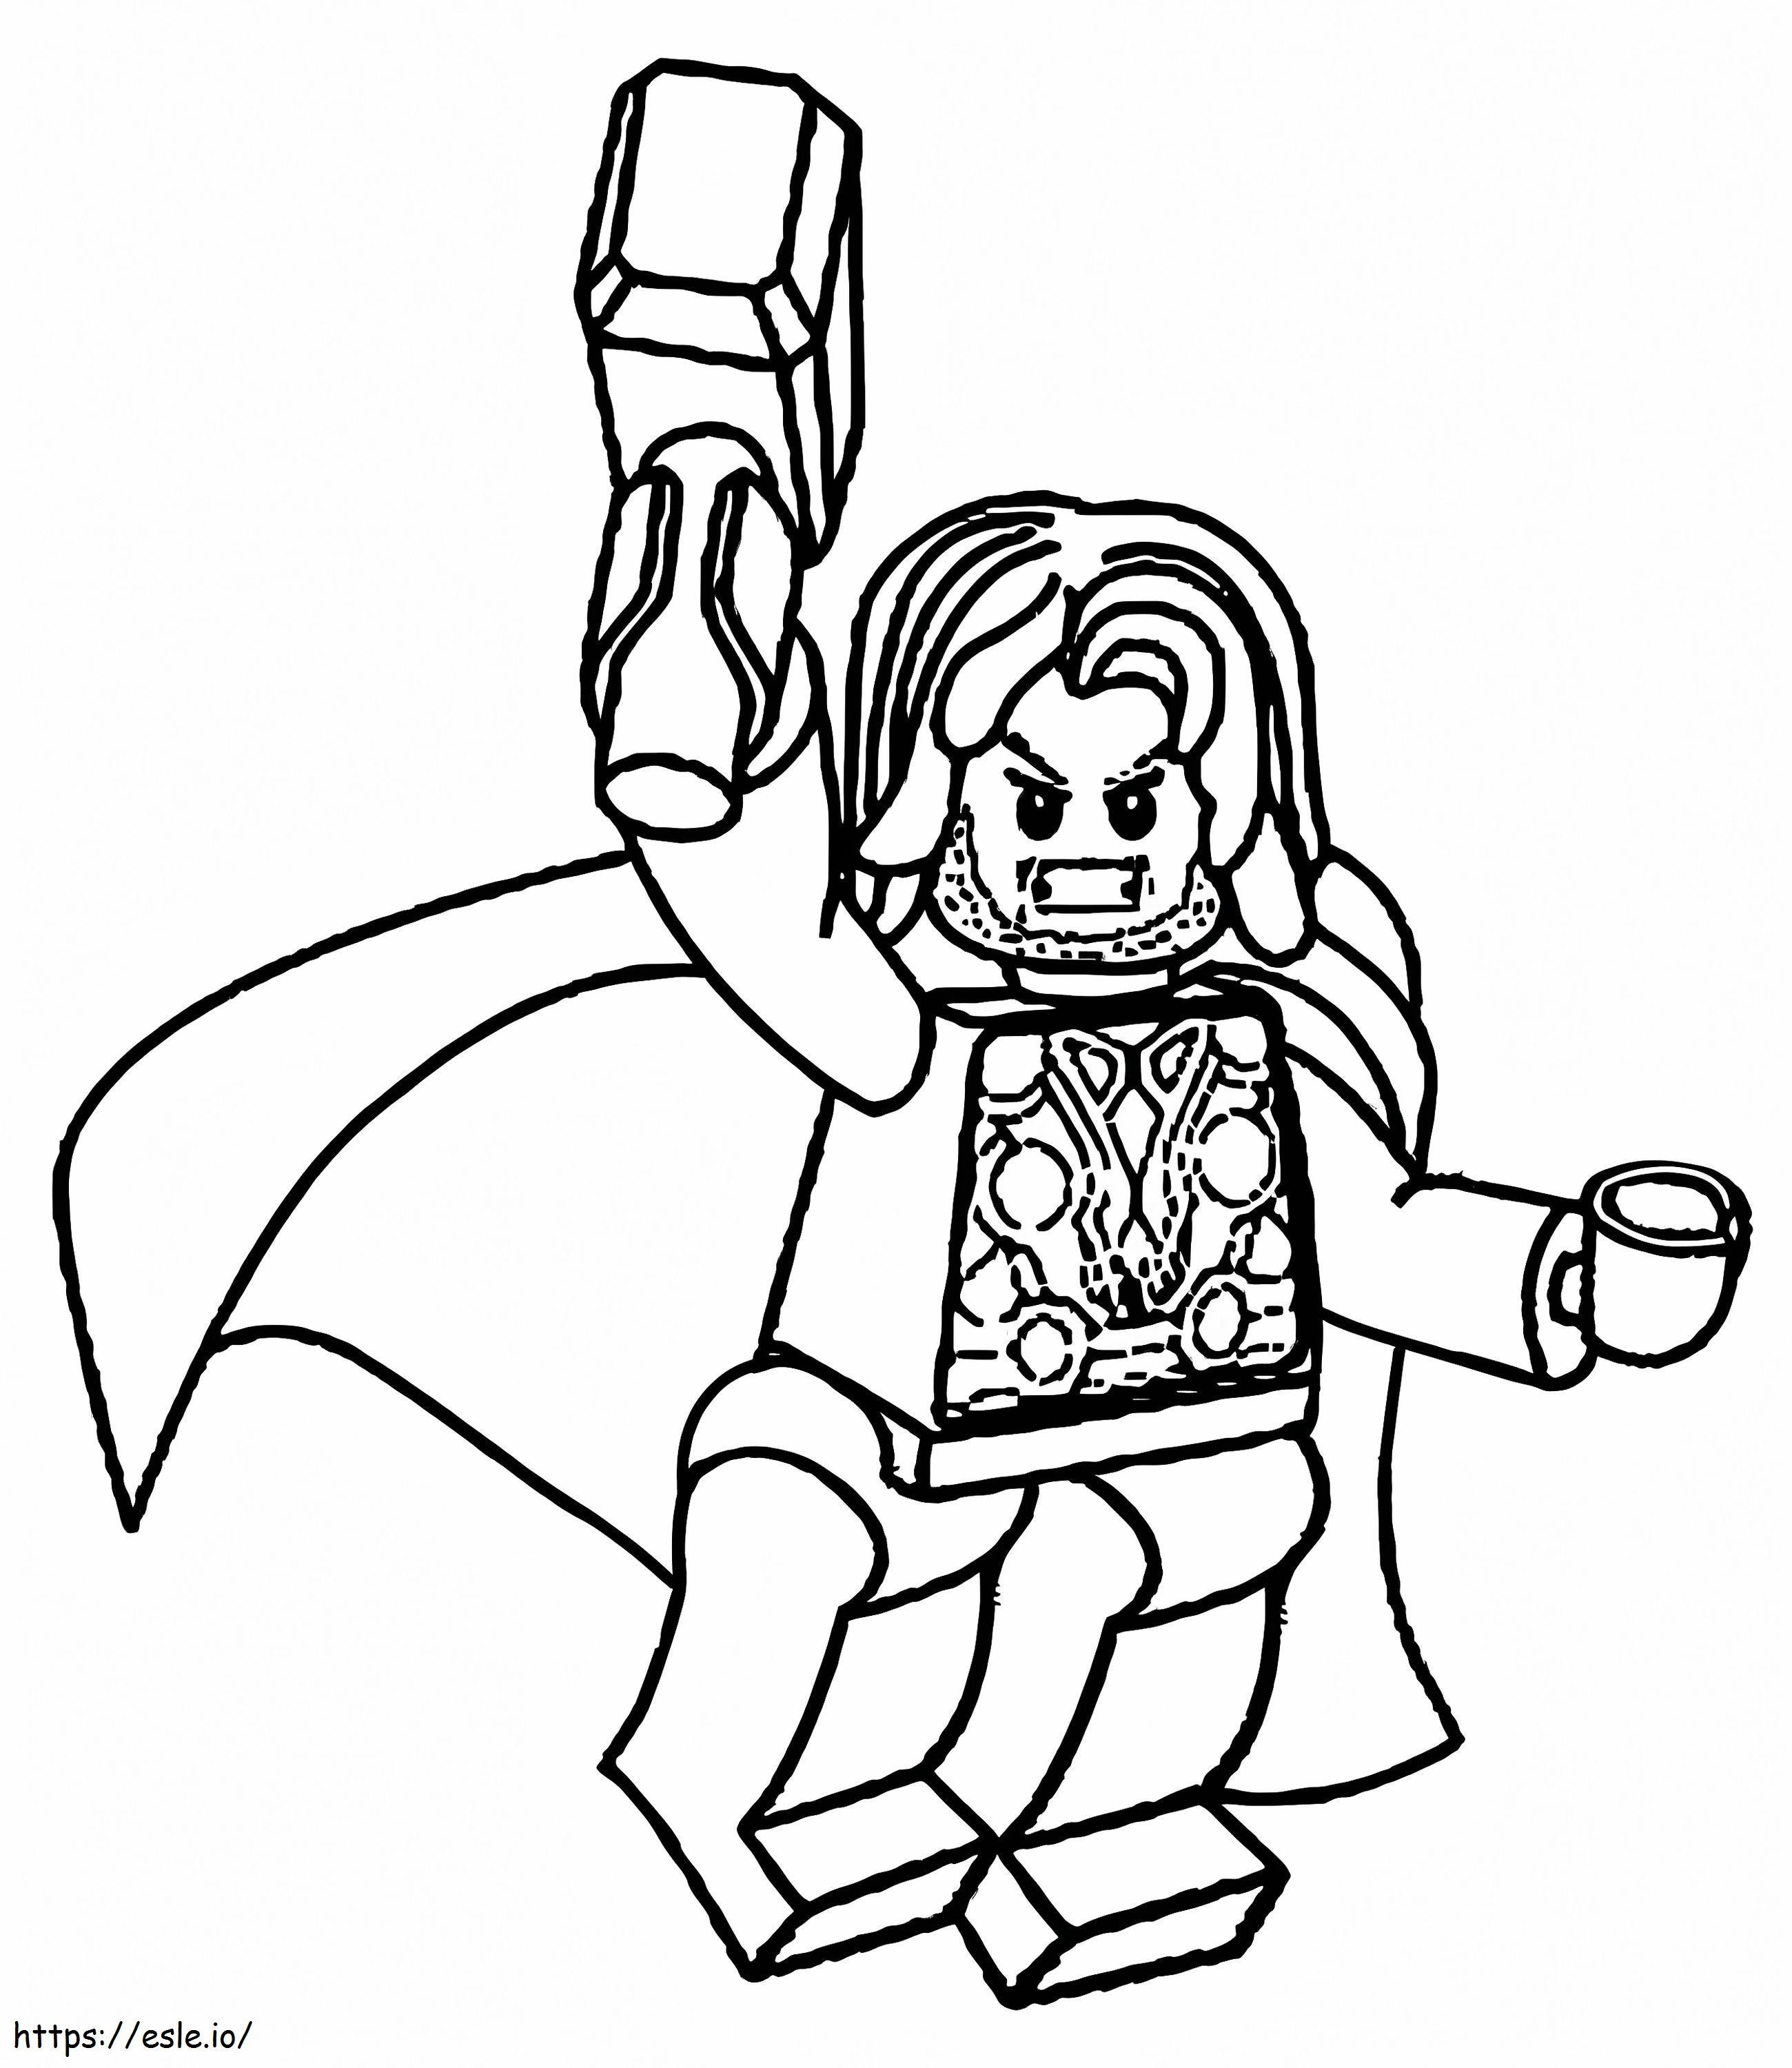 Lego Thor-Angriff ausmalbilder